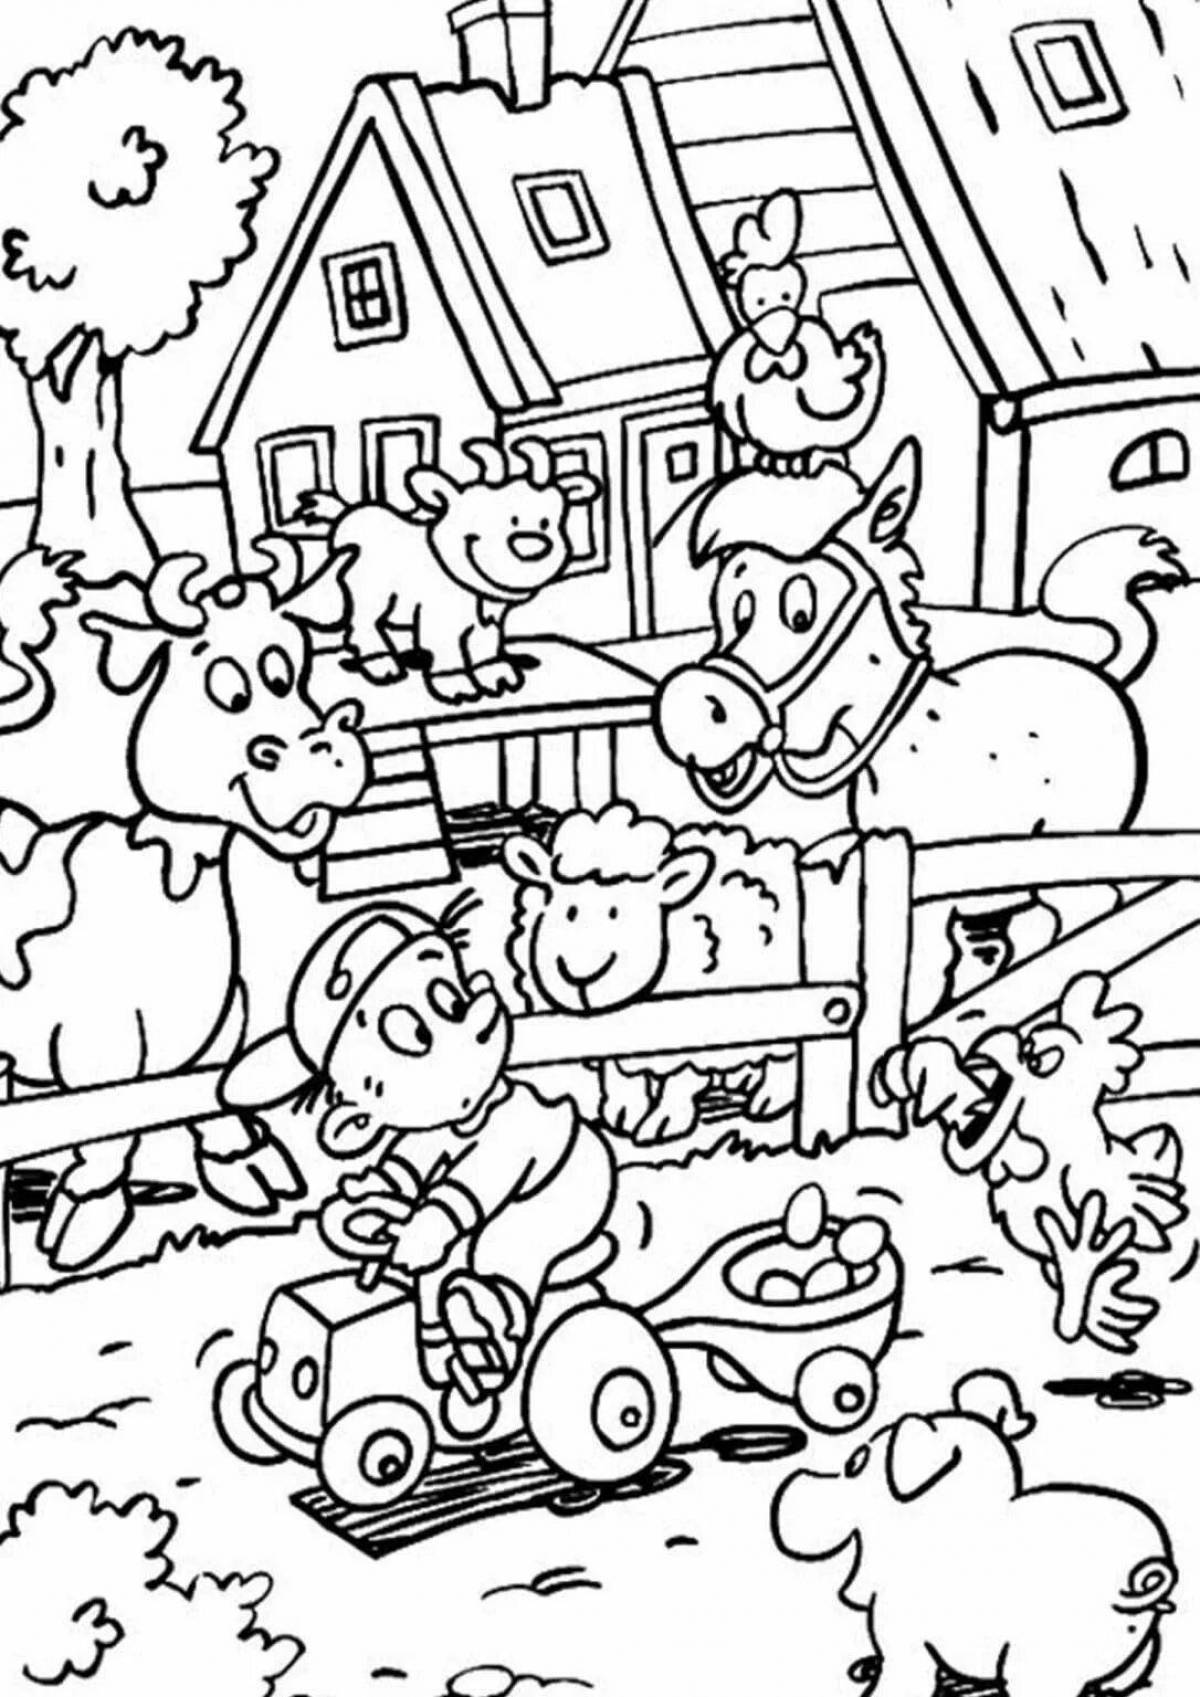 Bright farm coloring book for kids